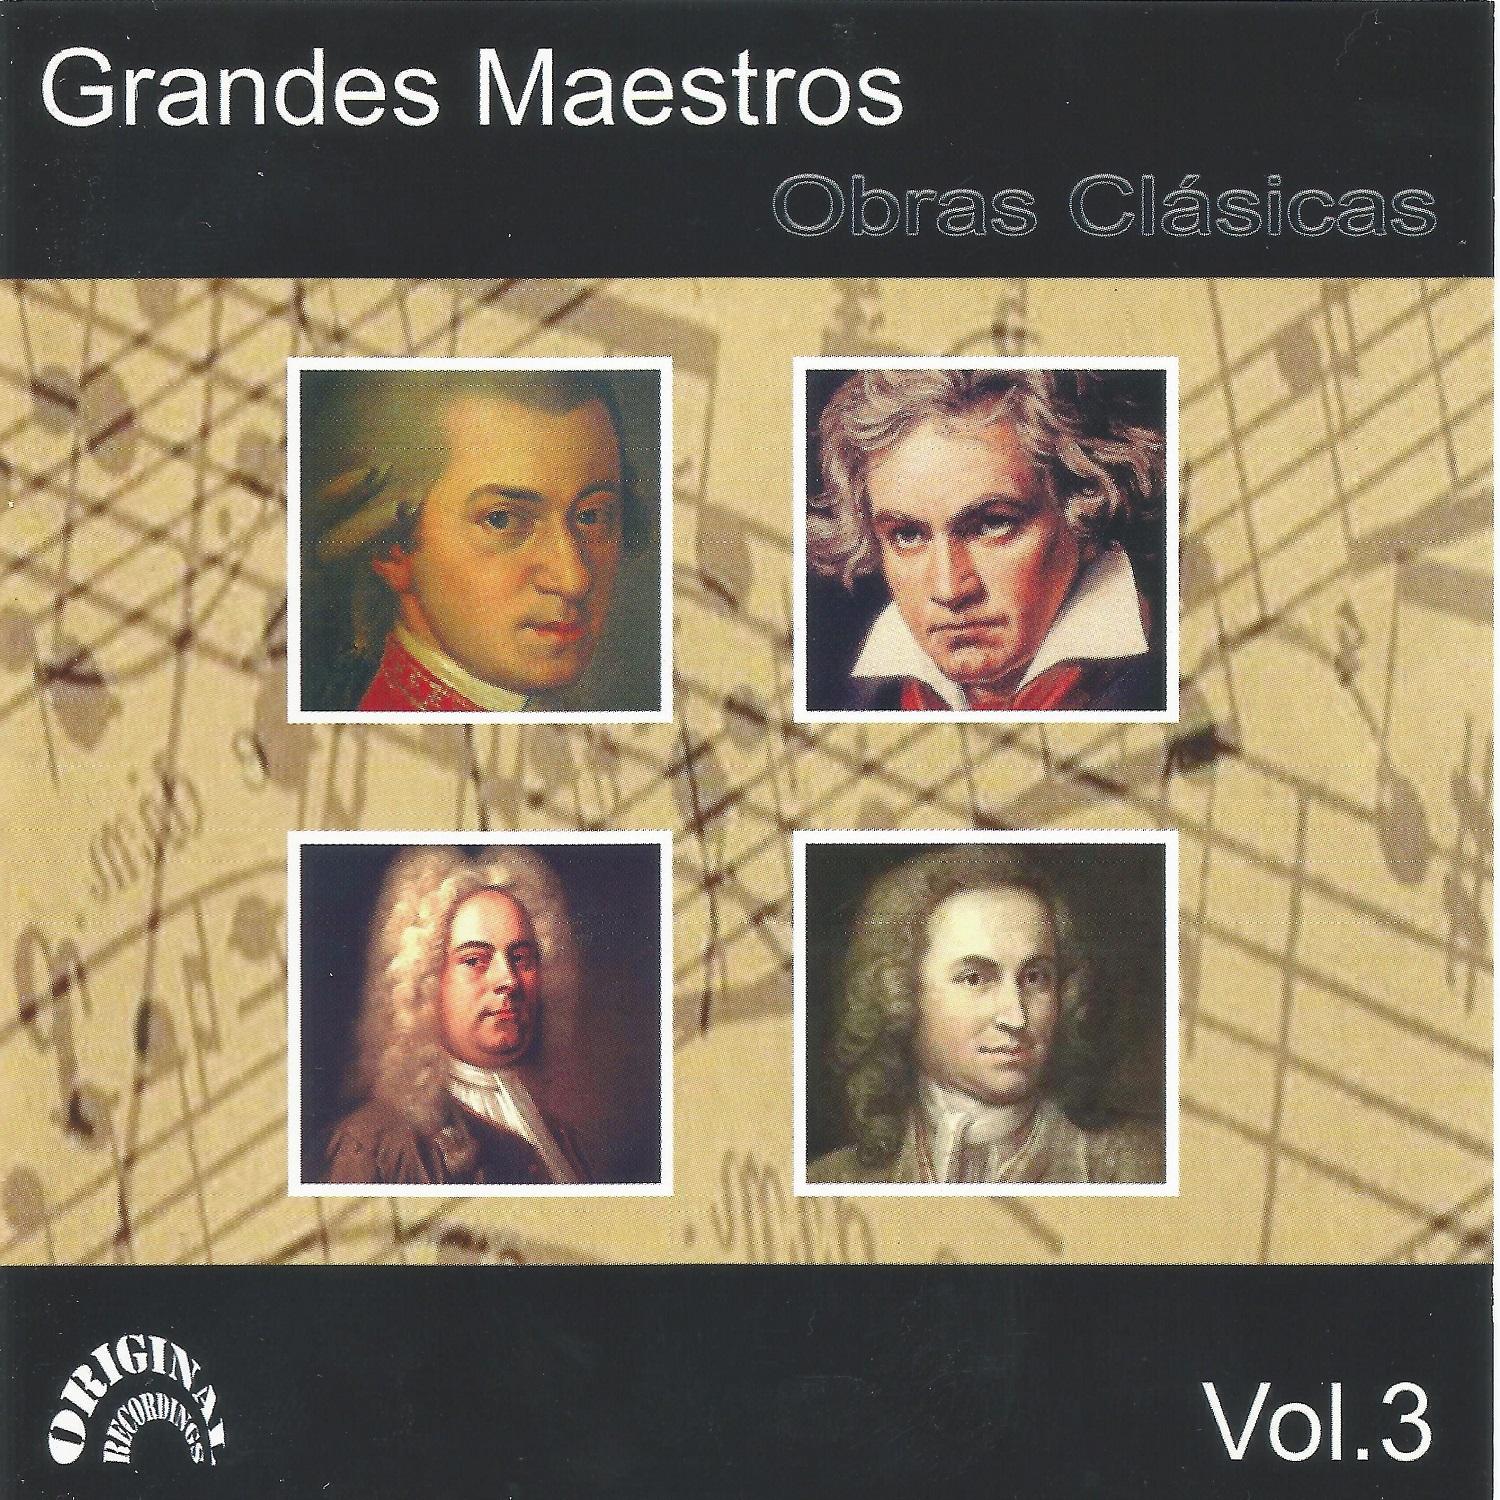 Concerto Grosso No. 1 in G Major, Op. 6, HWV 319: IV. Allegro